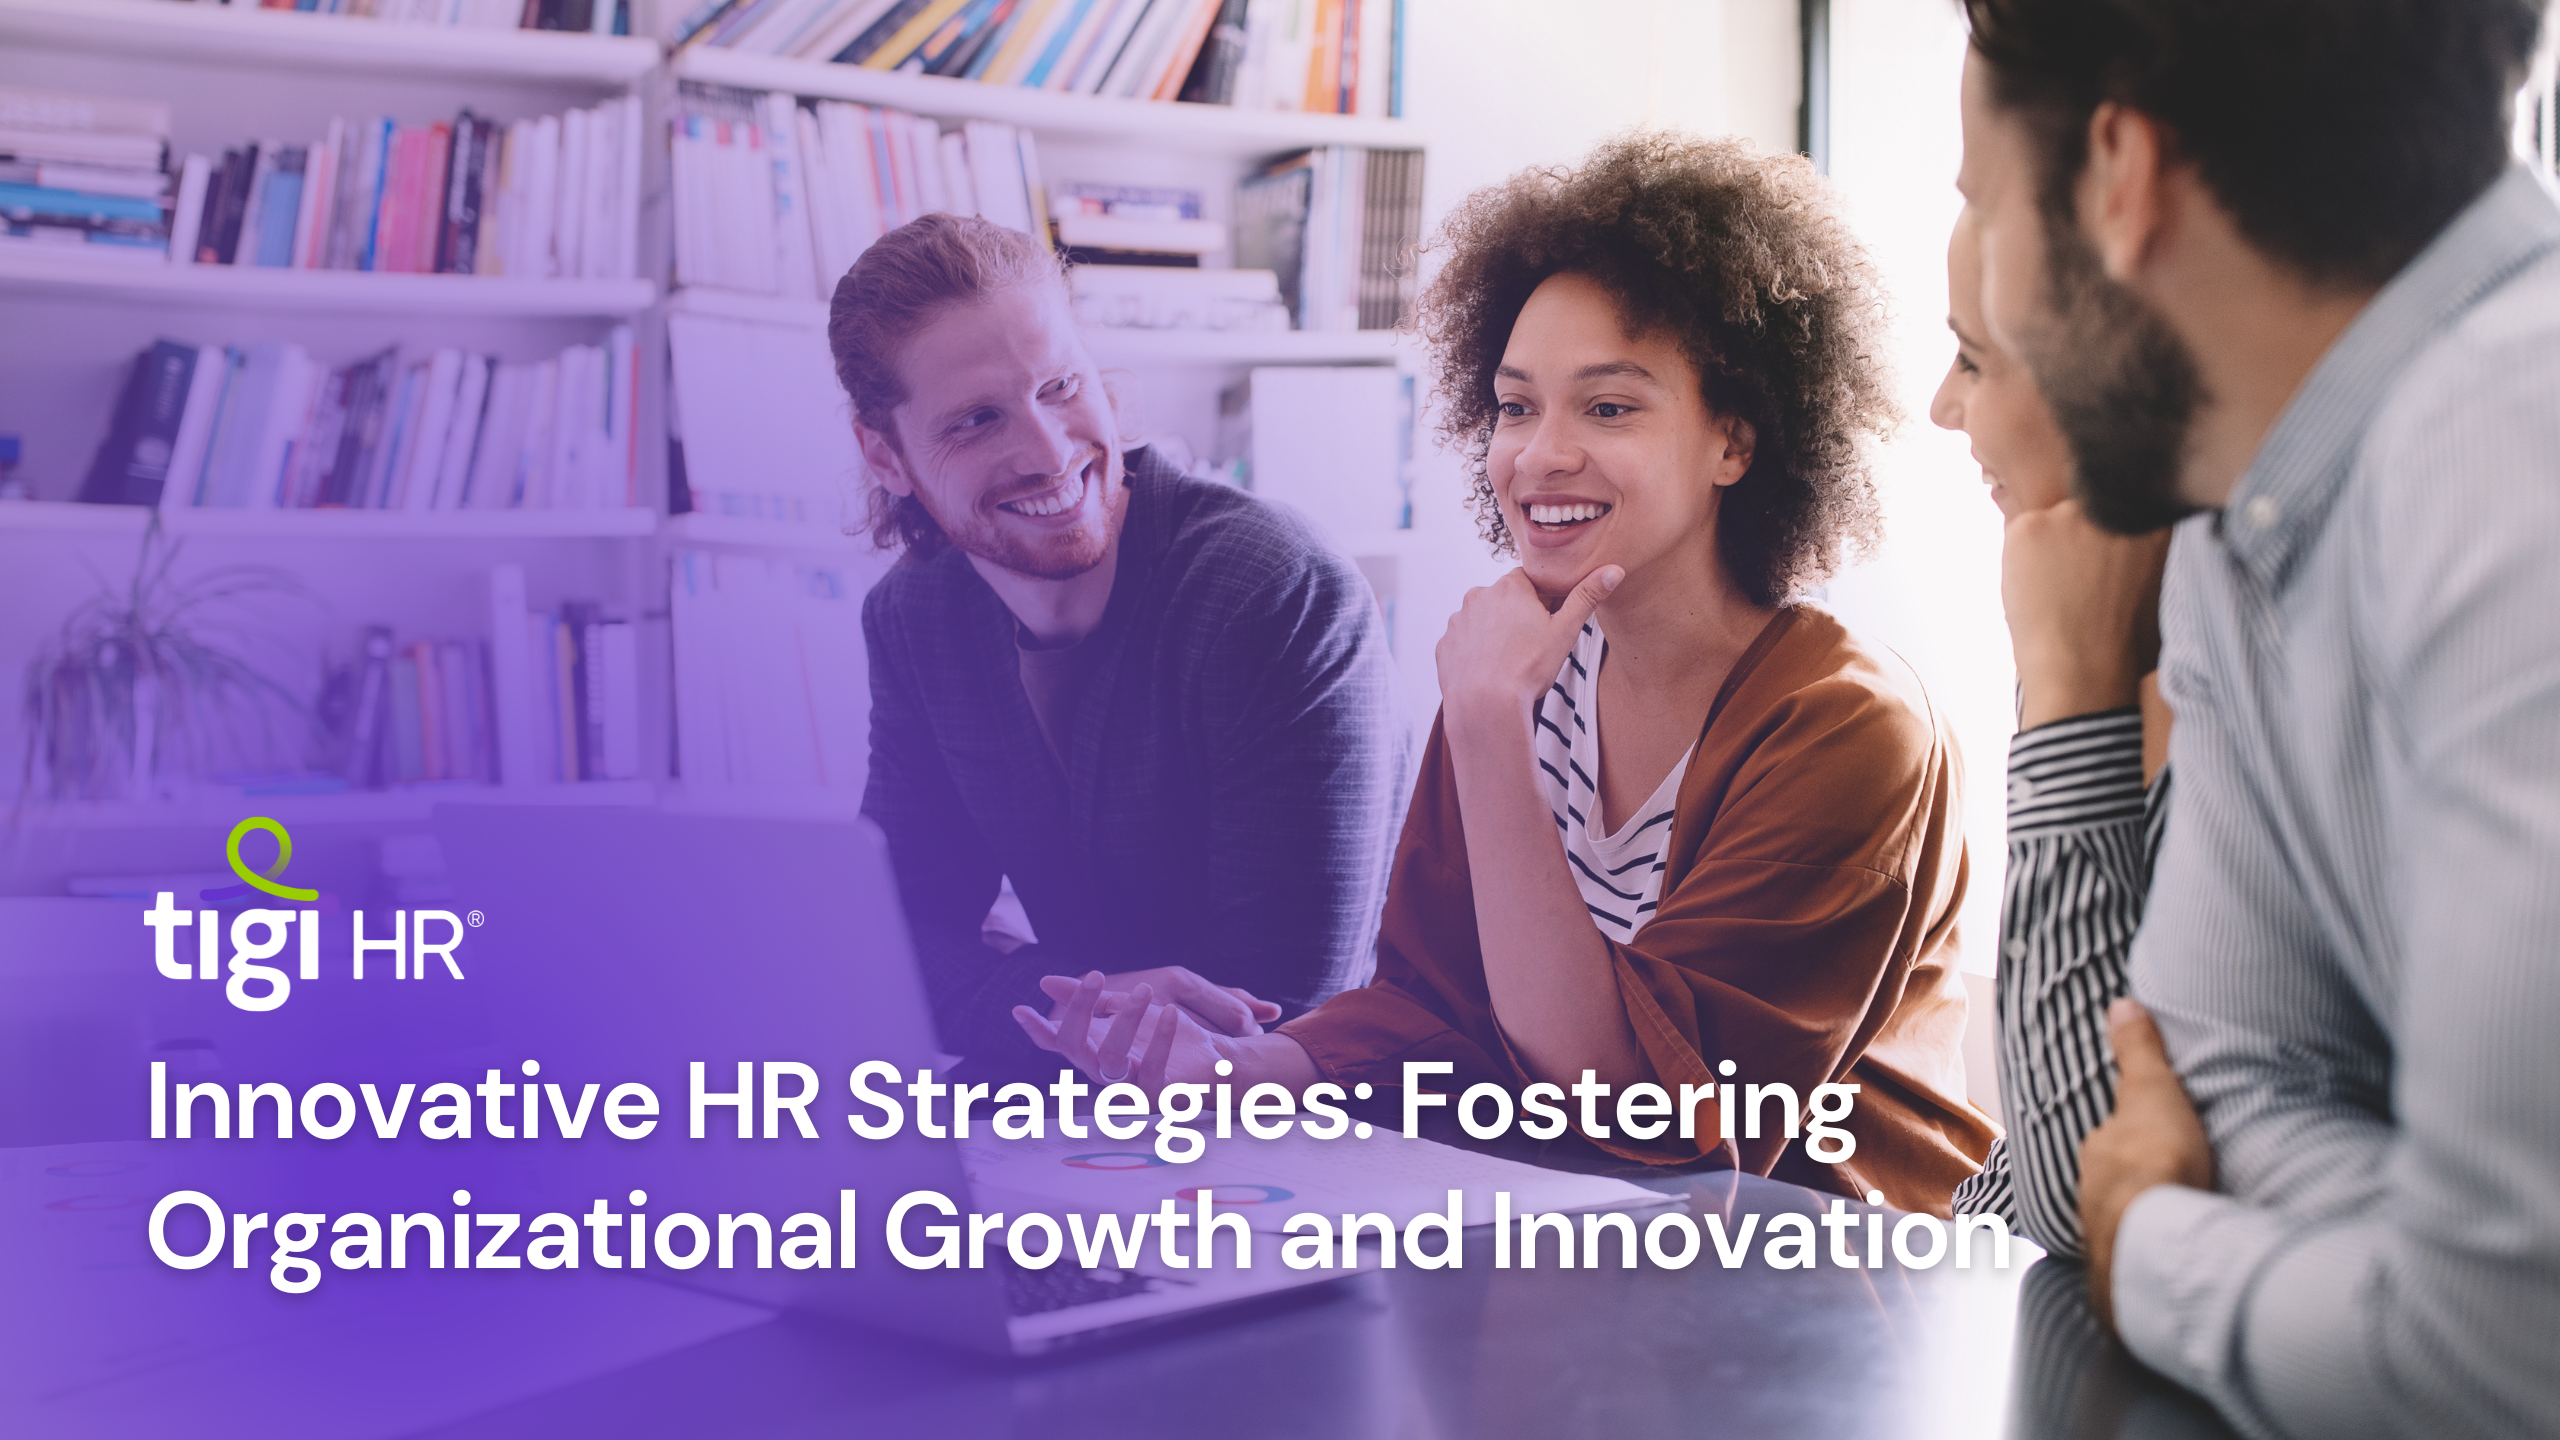 Innovative HR Strategies. Find jobs at TIGI HR.